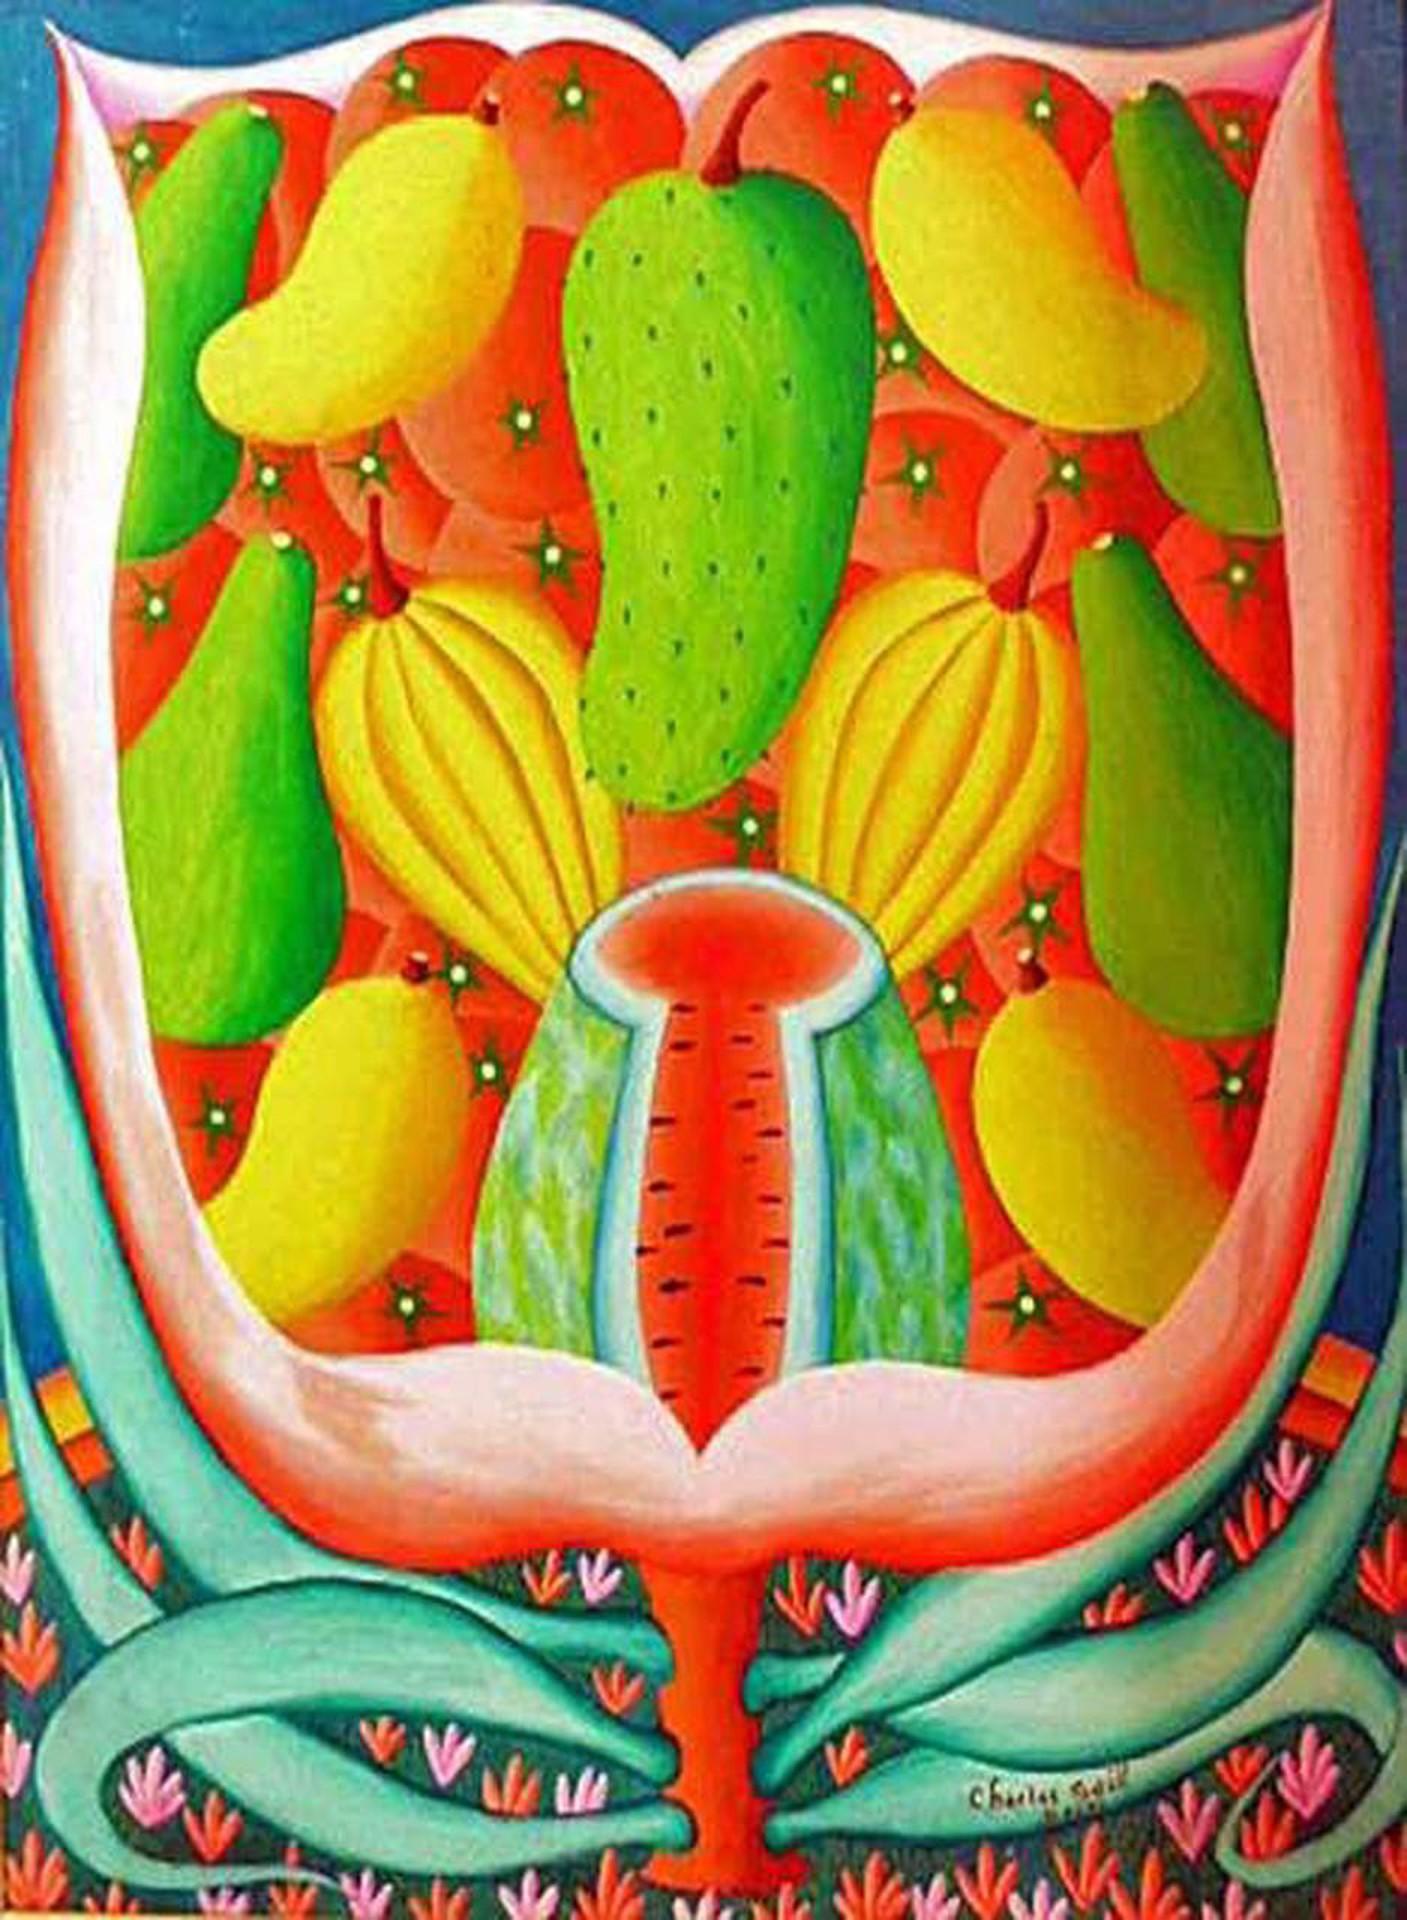 Still Life/Fruits #2-2-95MFN - Art by Charles Saul (Haitian, b. 1943)